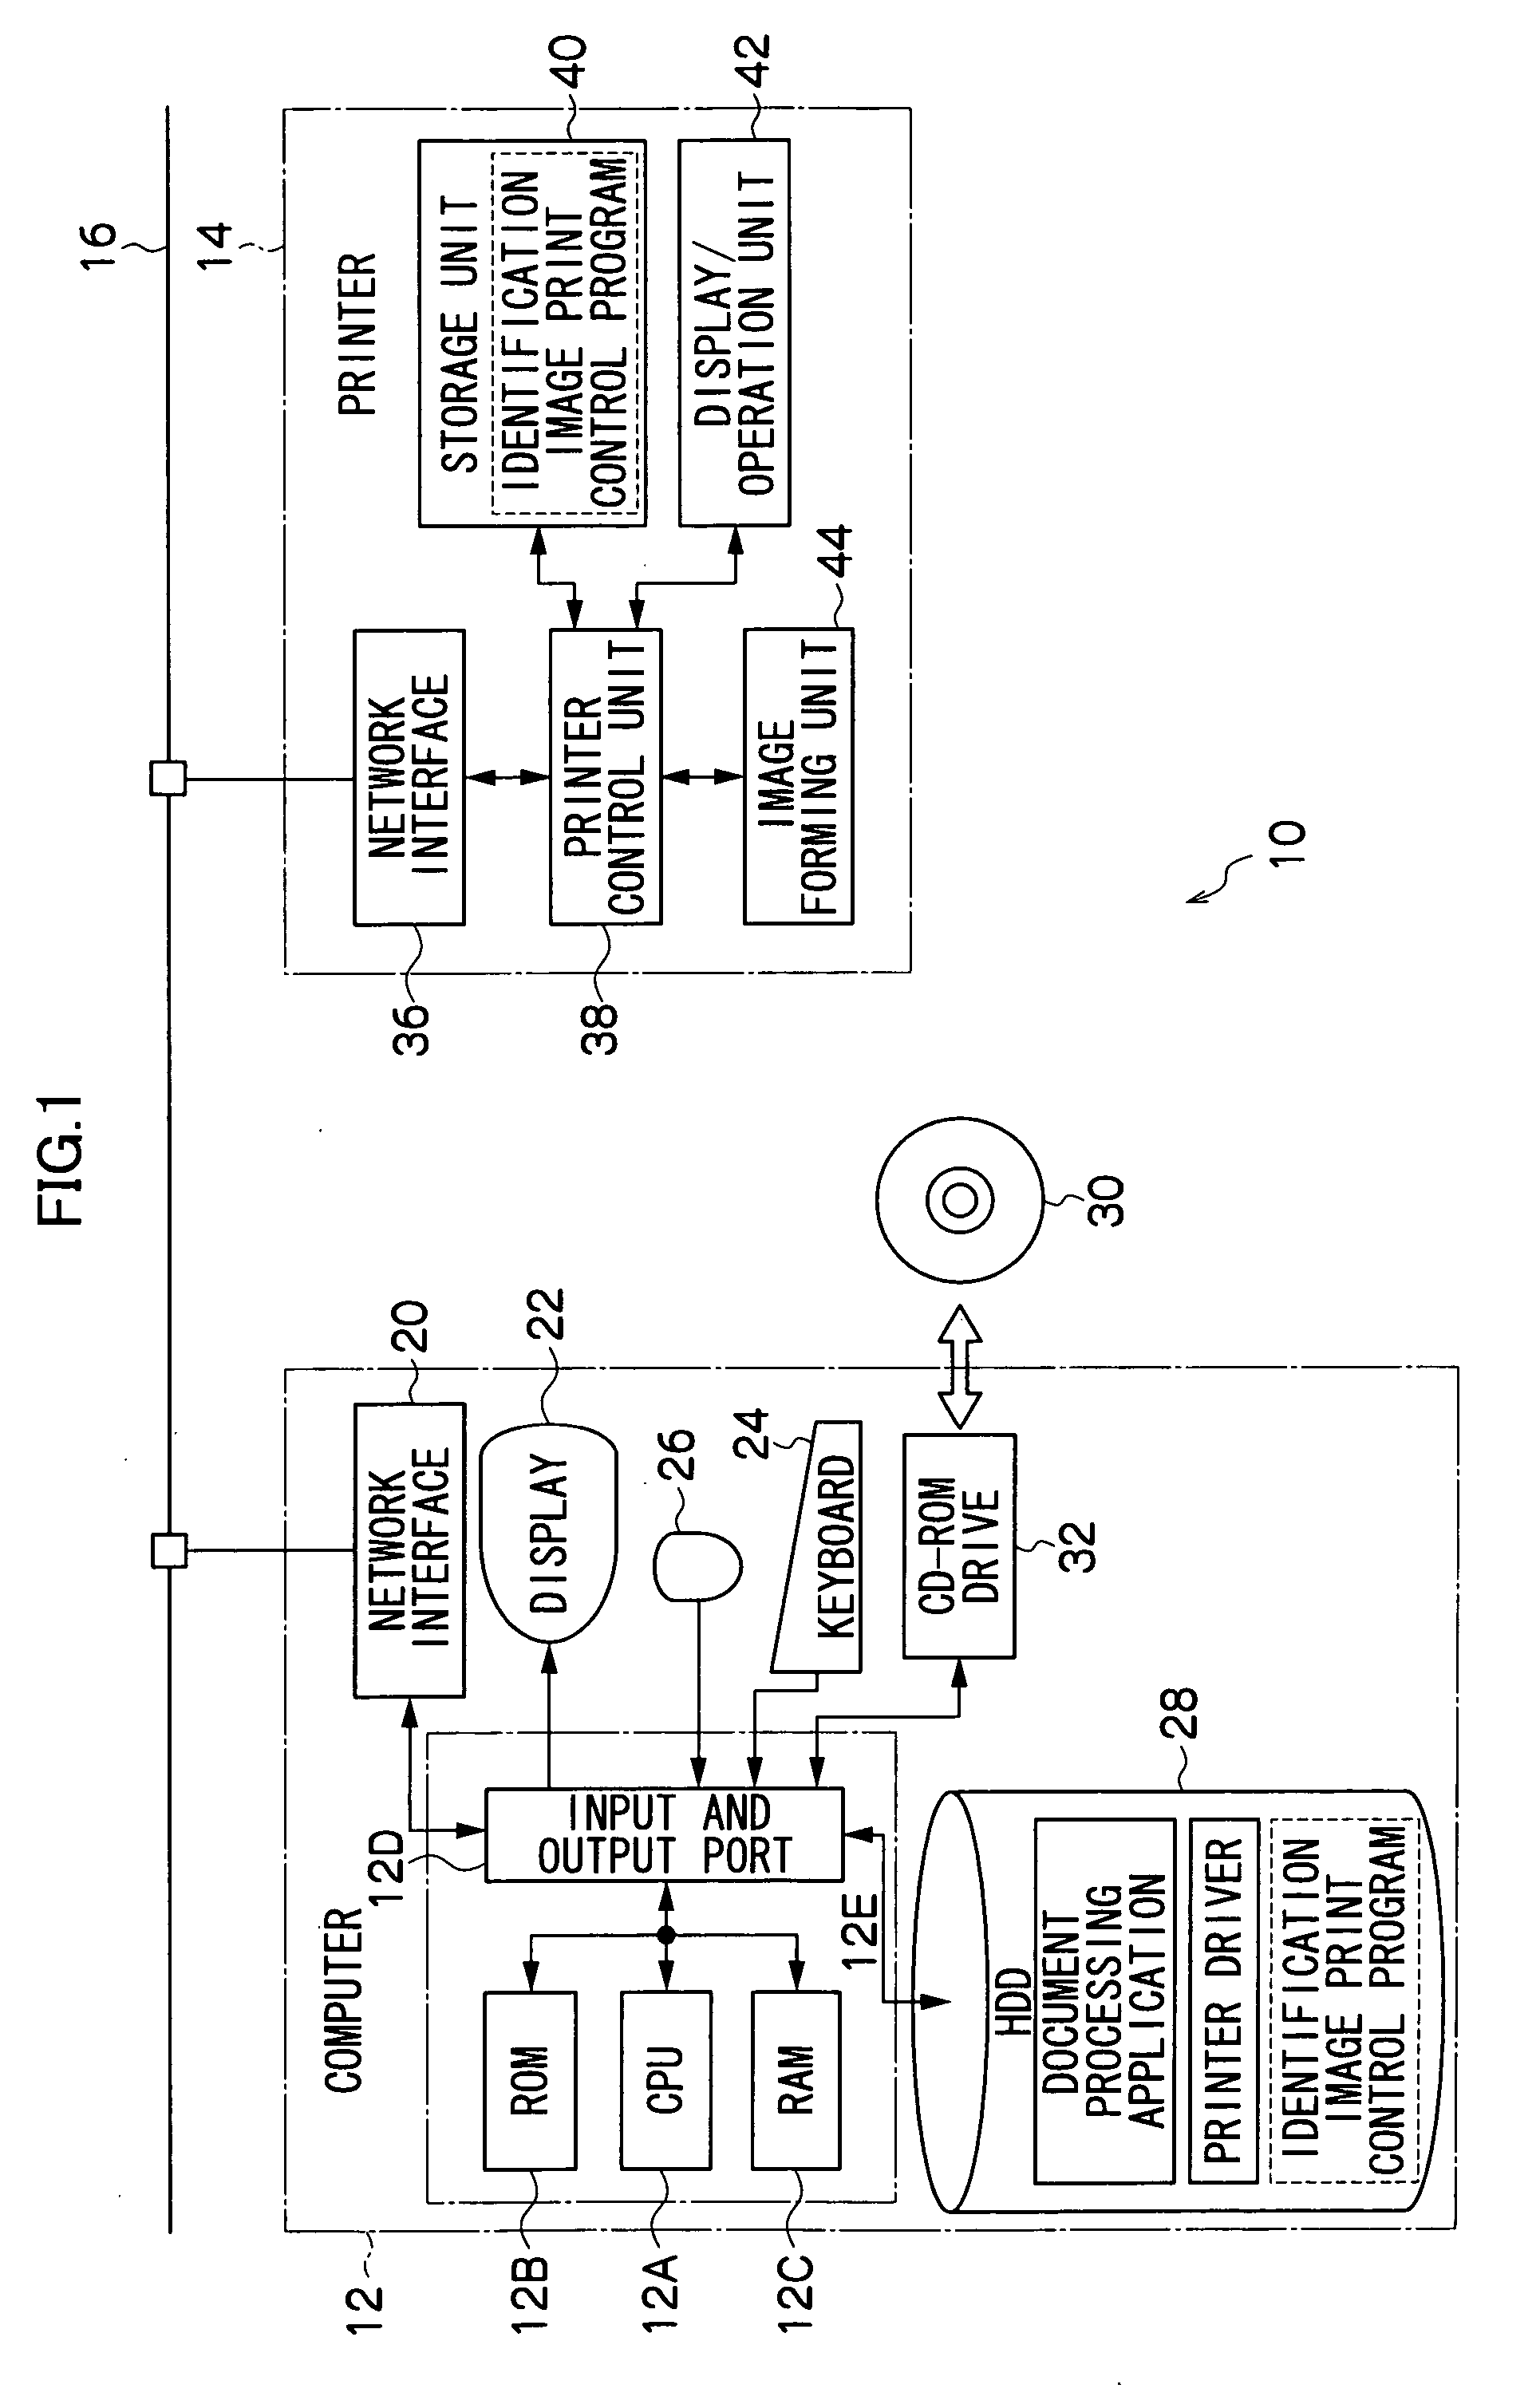 Print controlling apparatus, method, and storage medium